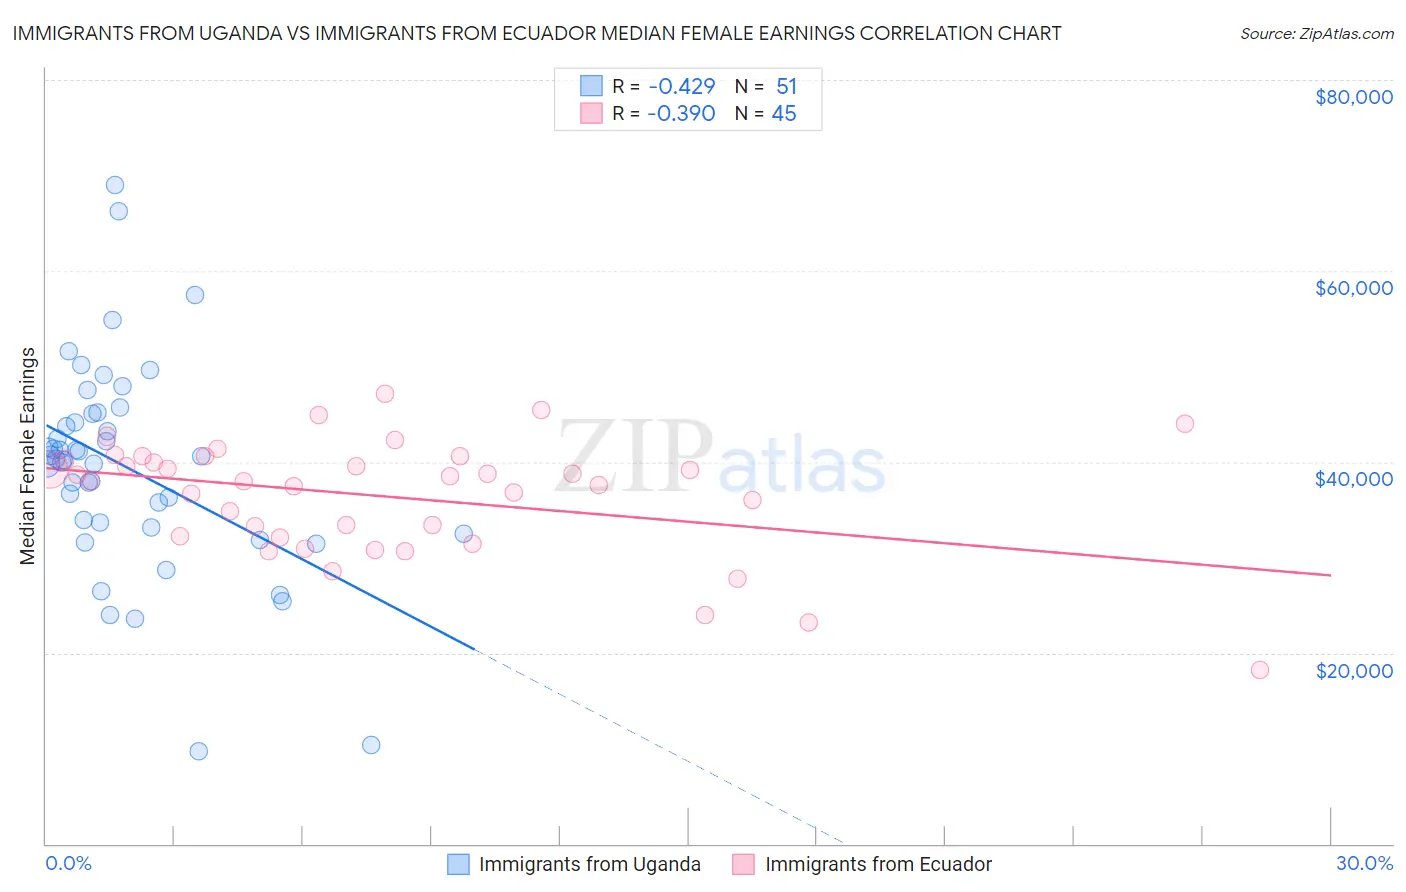 Immigrants from Uganda vs Immigrants from Ecuador Median Female Earnings